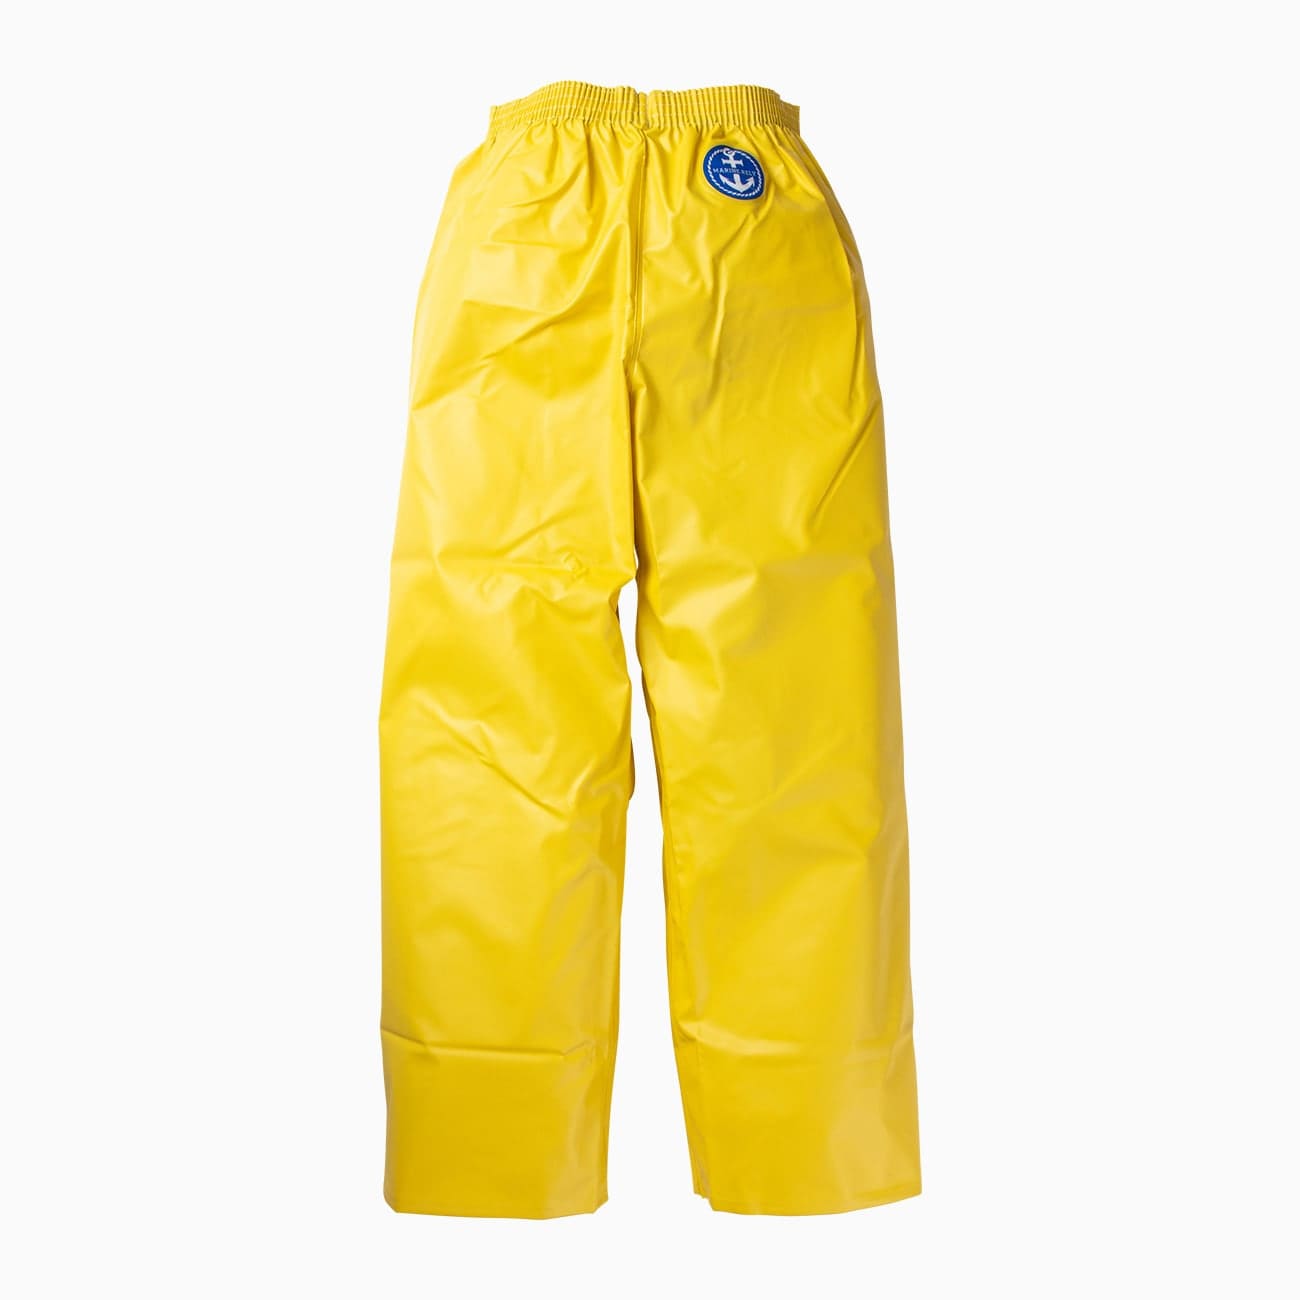 Marine rely pants Lemon yellow